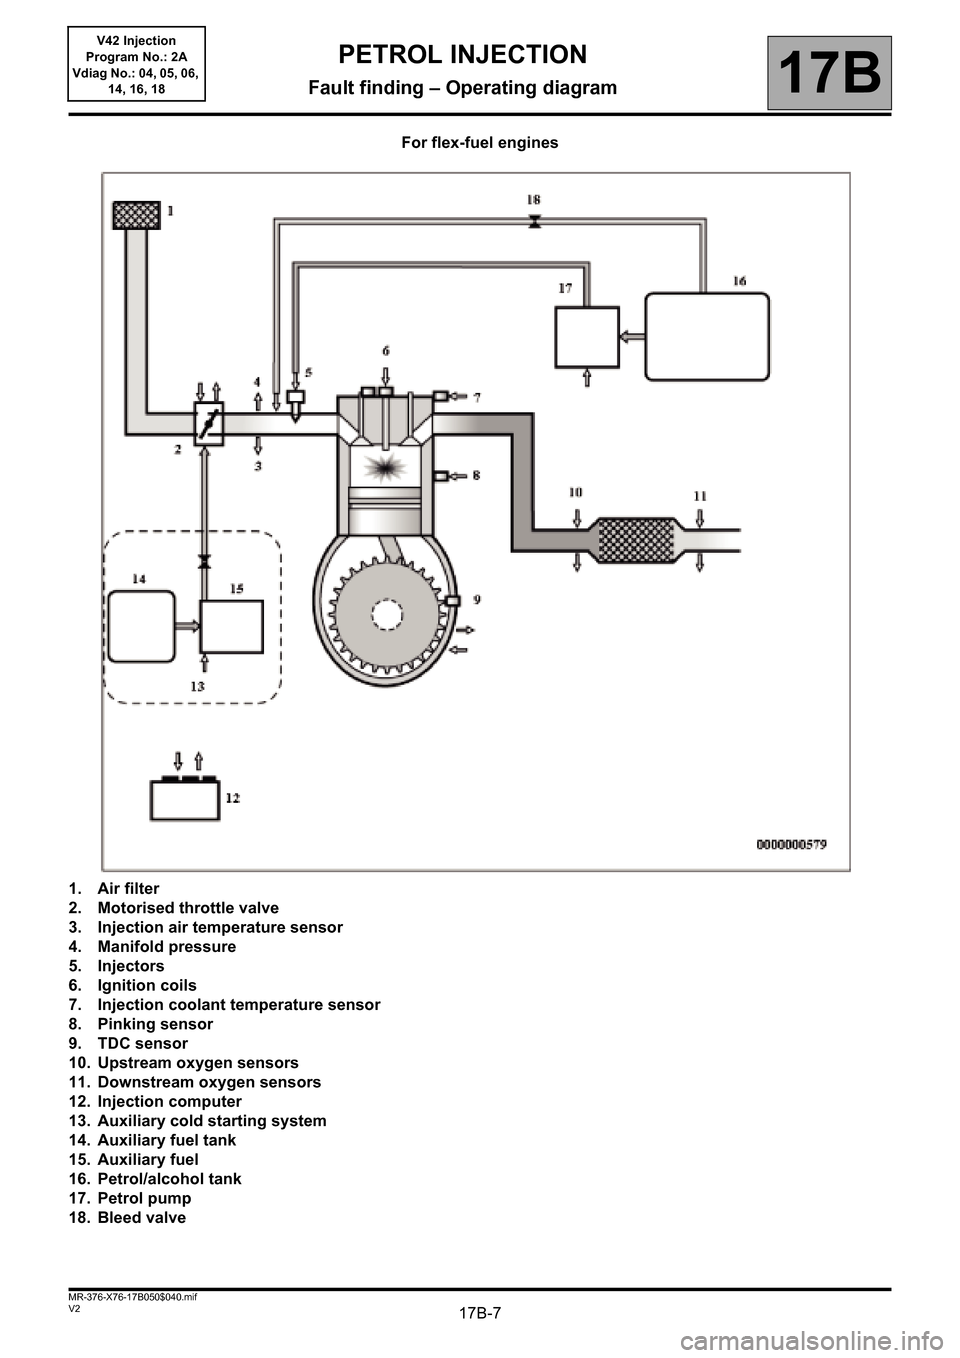 RENAULT KANGOO 2013 X61 / 2.G Petrol V42 Injection Workshop Manual 17B-7V2 MR-376-X76-17B050$040.mif
17B
V42 Injection
Program No.: 2A
Vdiag No.: 04, 05, 06, 
14, 16, 18
For flex-fuel engines
1. Air filter
2. Motorised throttle valve 
3. Injection air temperature sen